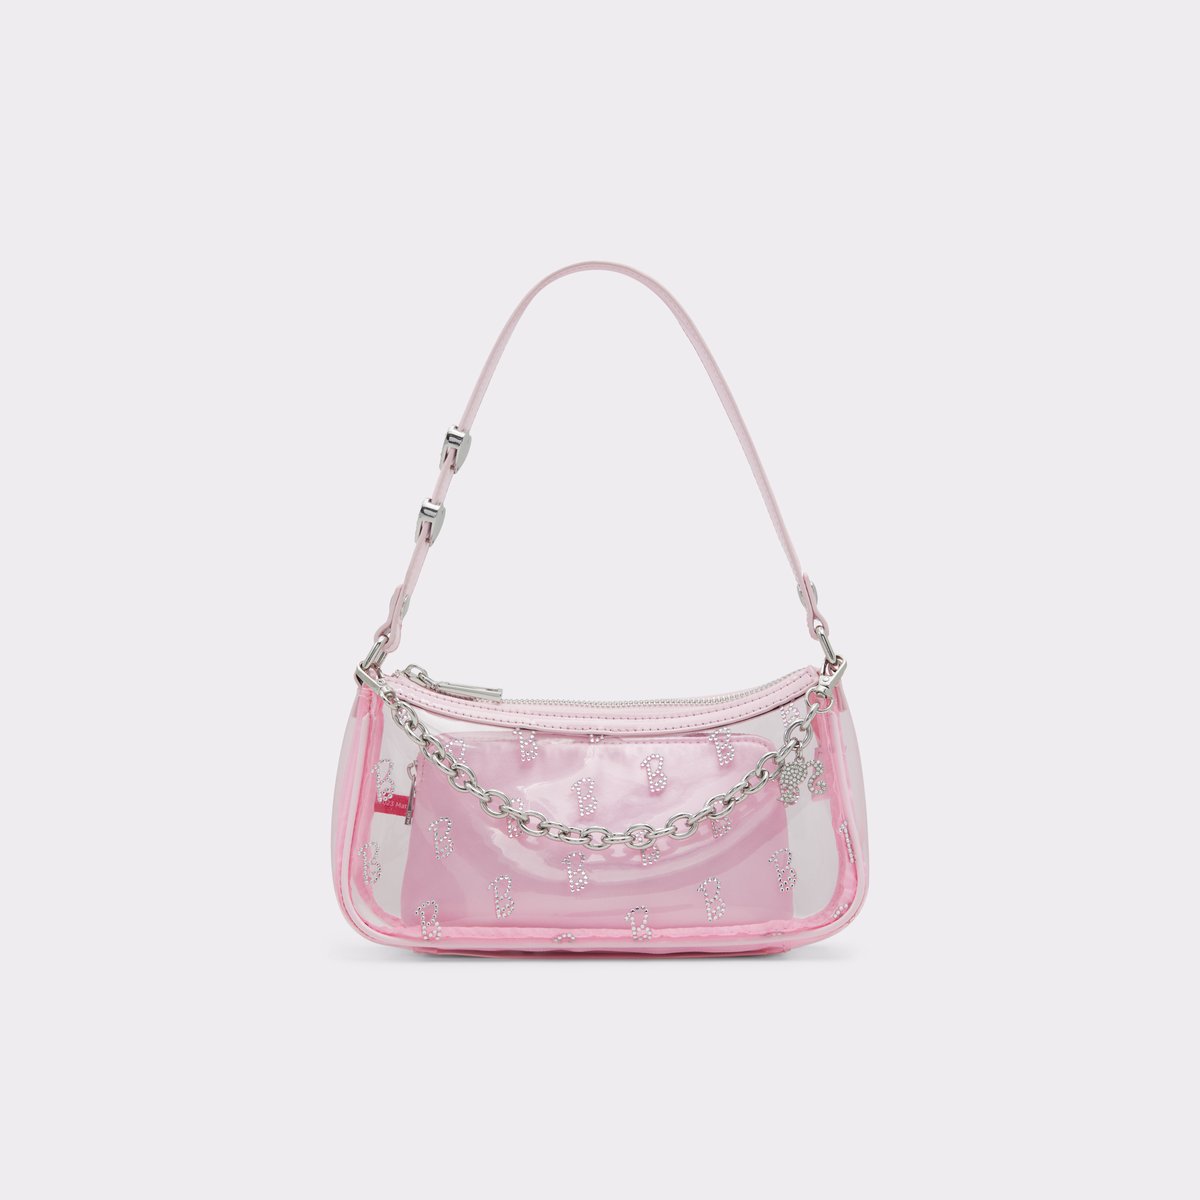 Barbie™ Pink Diamante Handbag